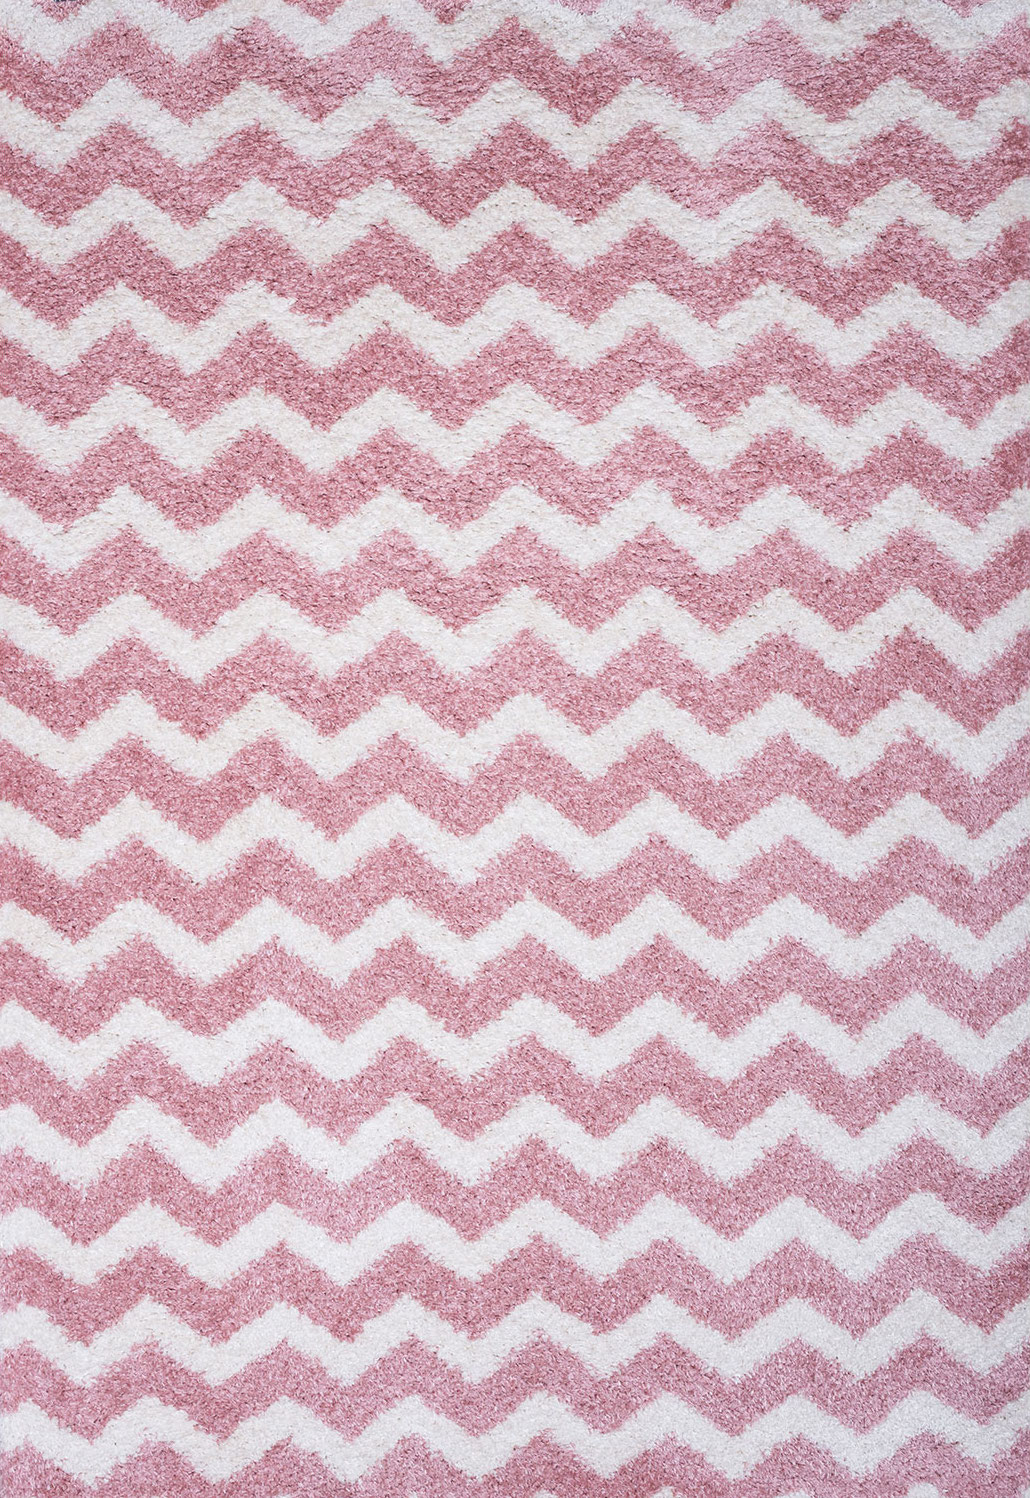 Shaggy παιδικό χαλί Cocoon 8396/55 ροζ με ζικ ζακ ρίγες - 3x4 Colore Colori